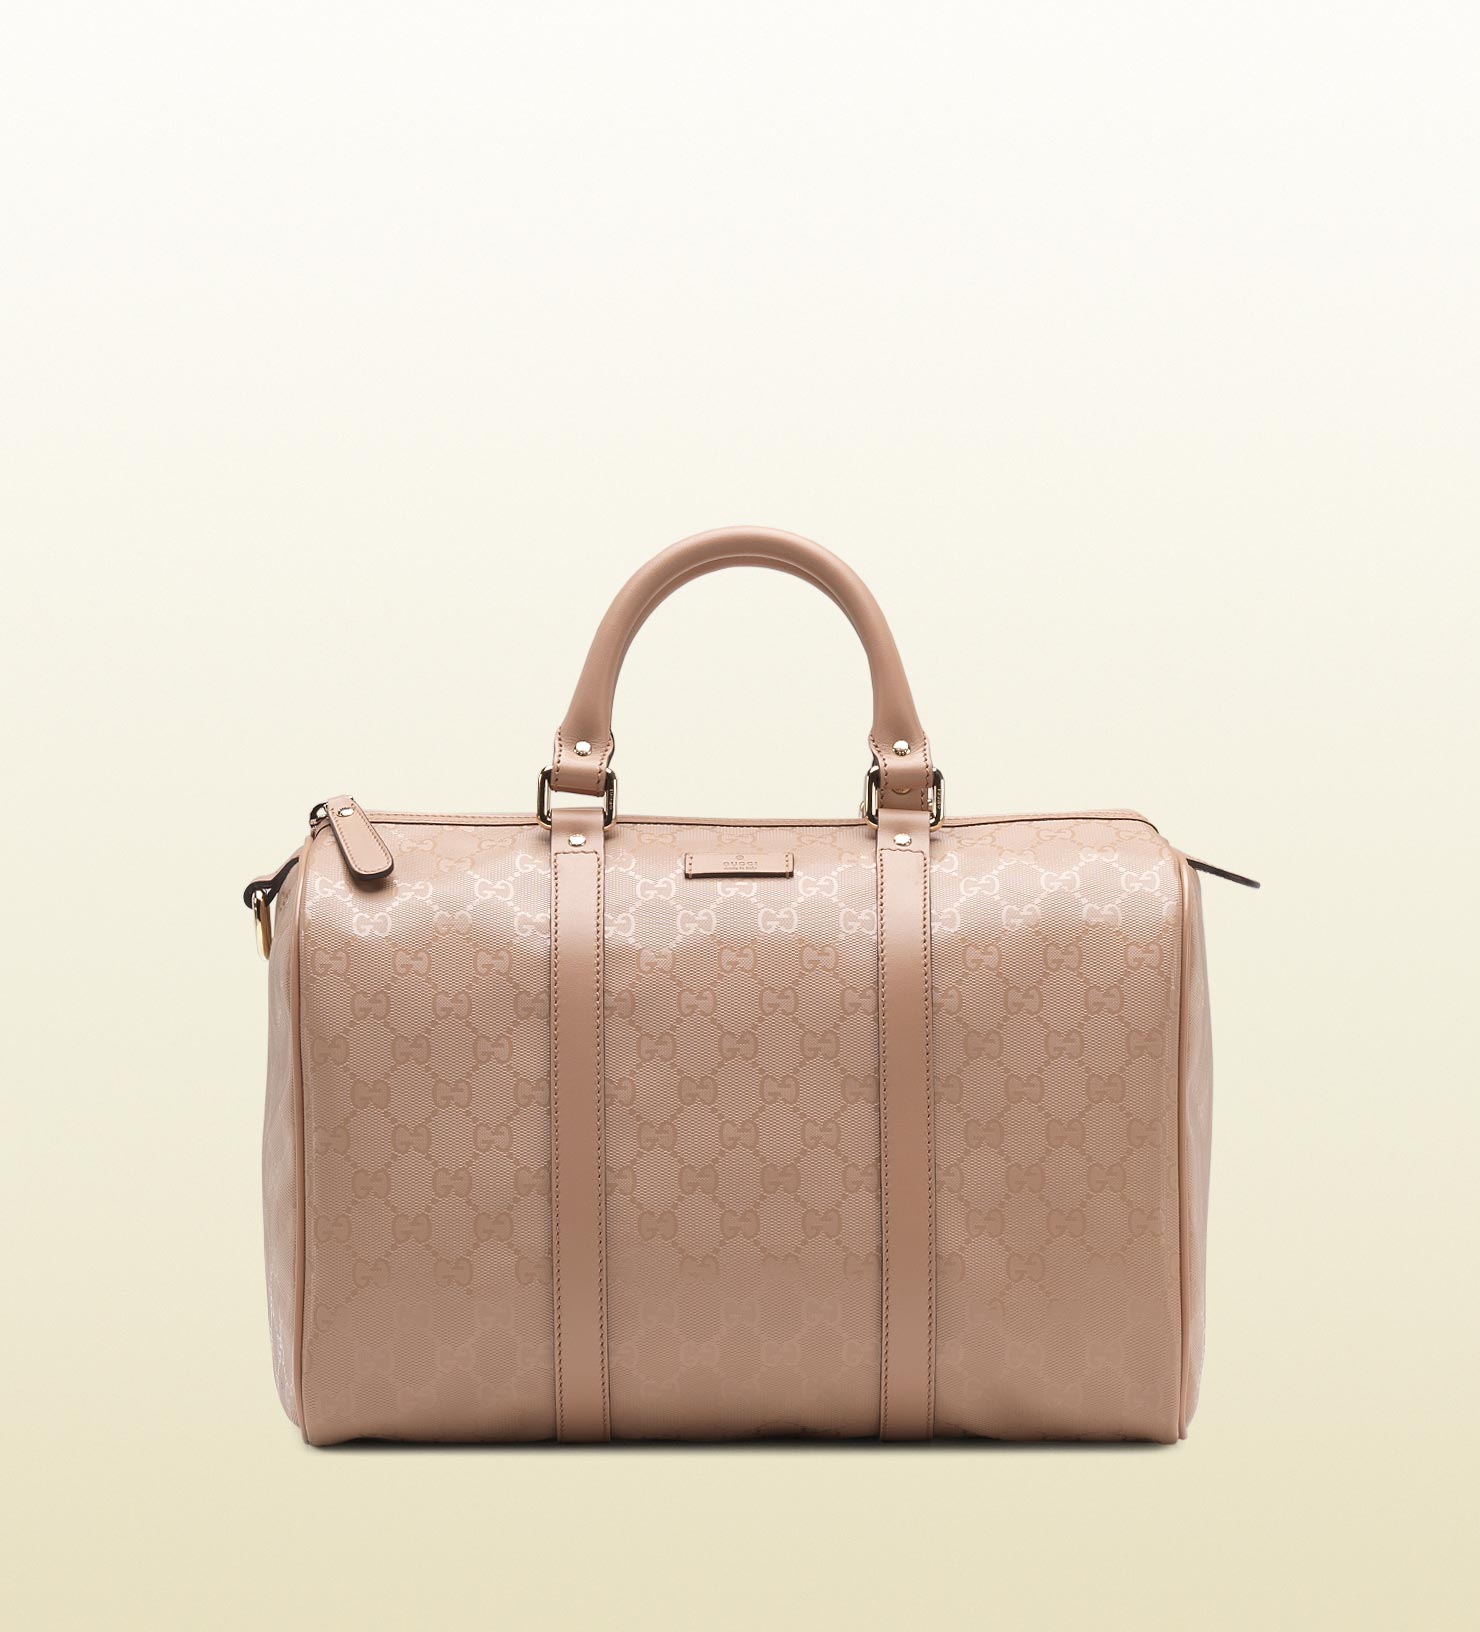 Lyst - Gucci Joy Leather Boston Bag in Pink